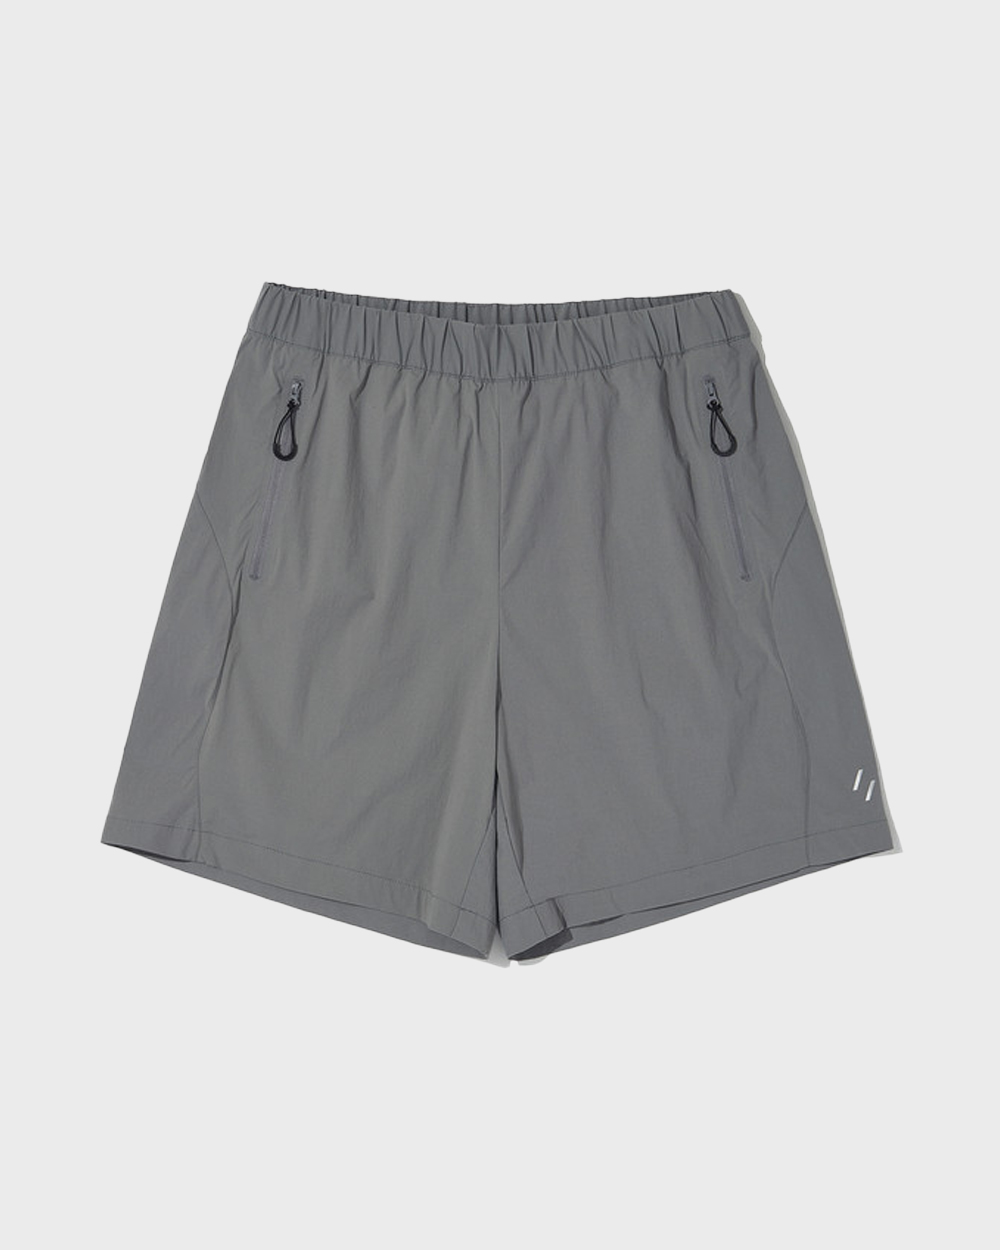 Huron Hike Shorts (Charcoal)